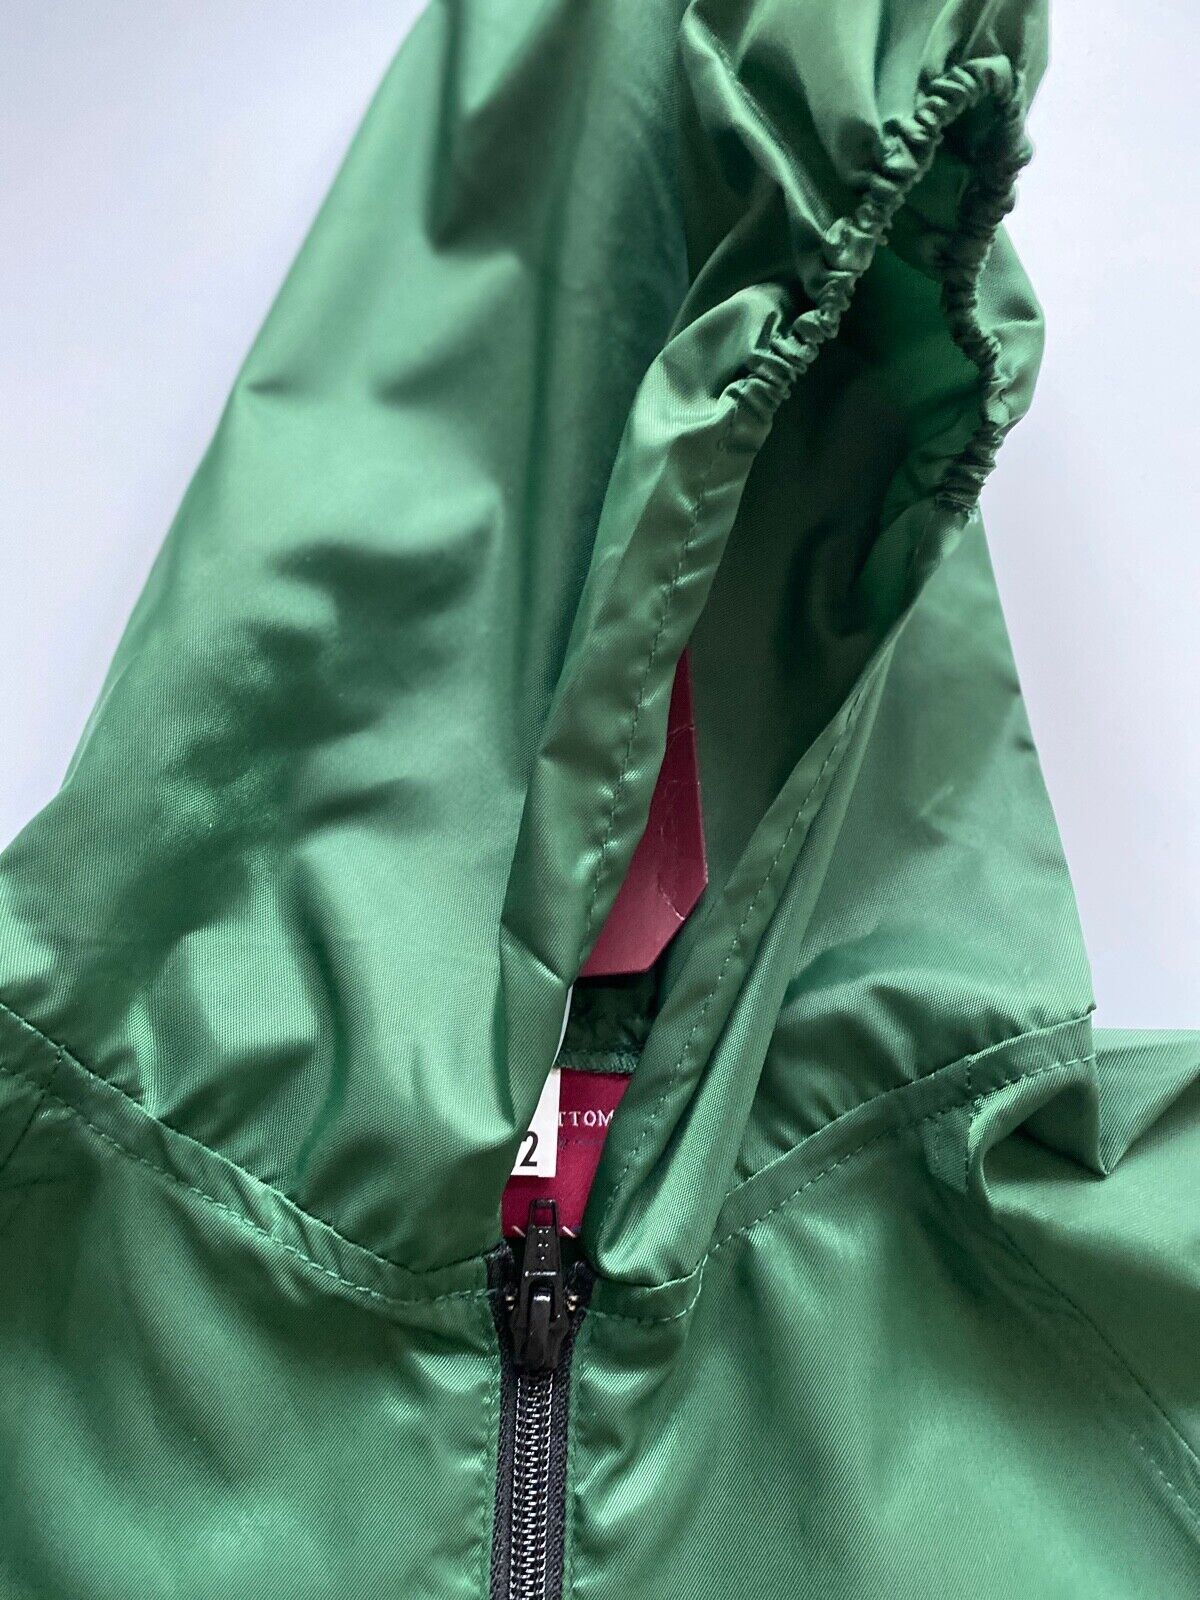 Kids Winterbottom's Green Rain Pack-away Coat Size 22"